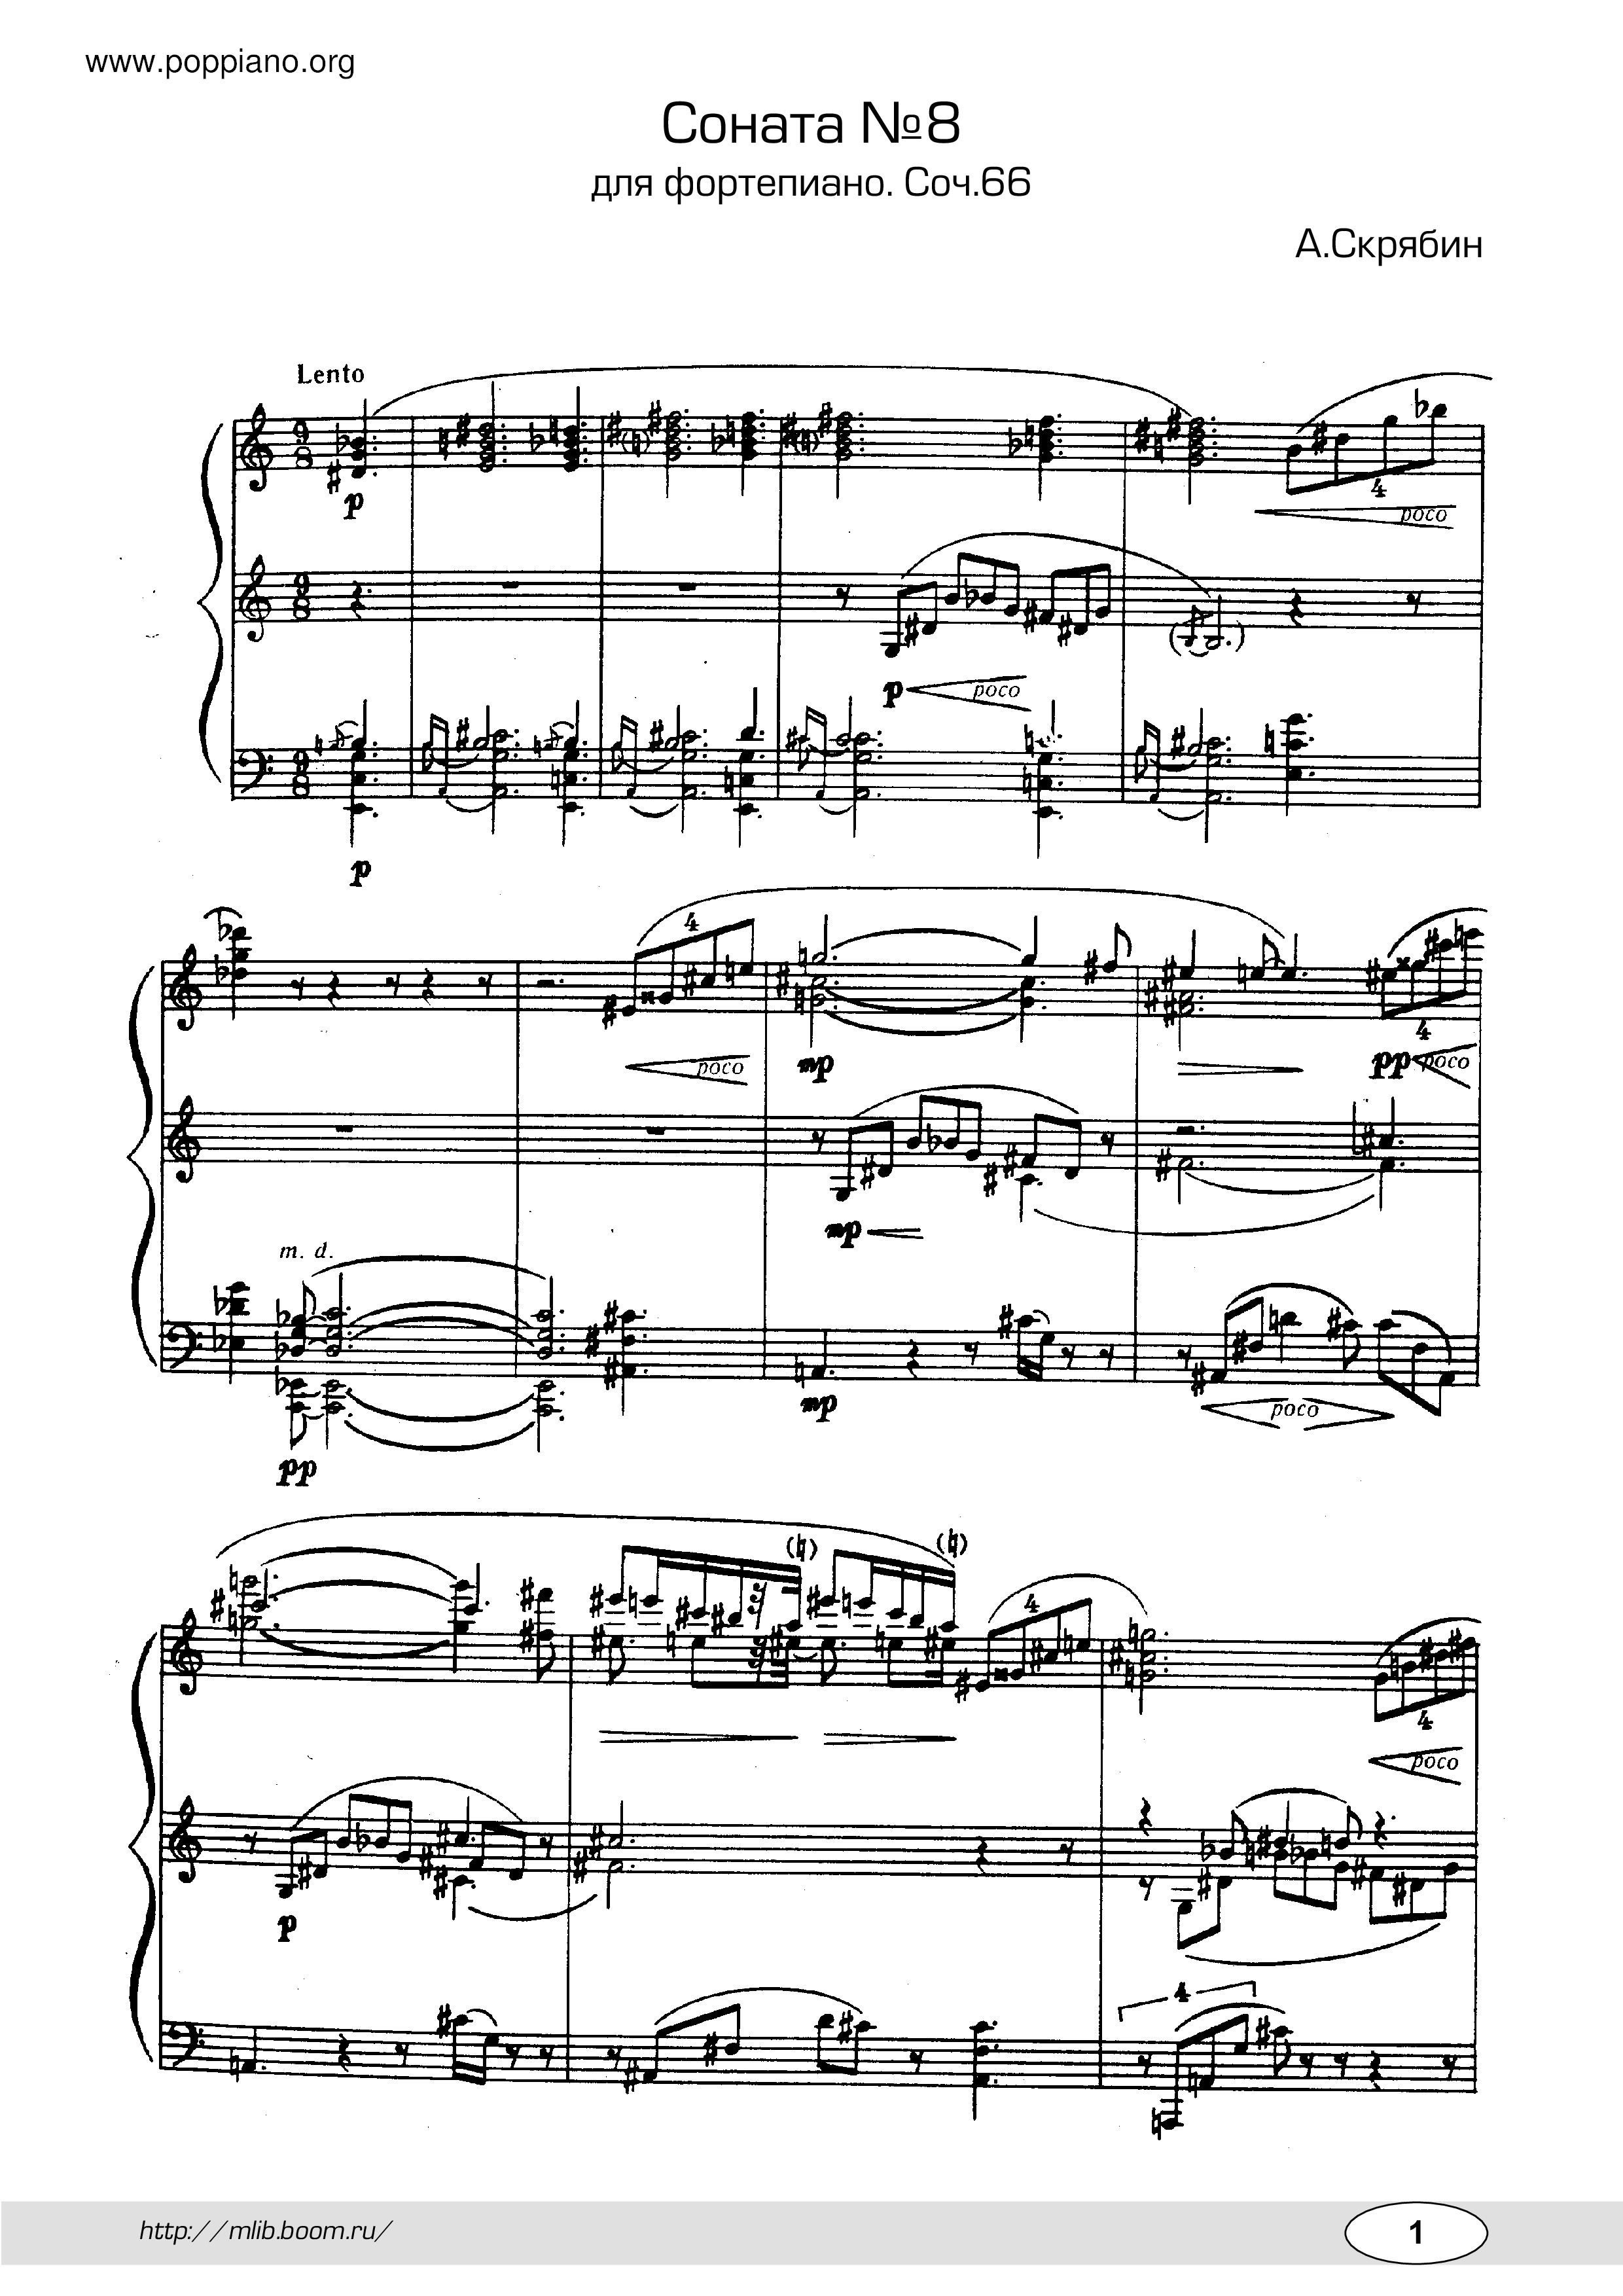 Piano Sonata No.8, Op.66 Score